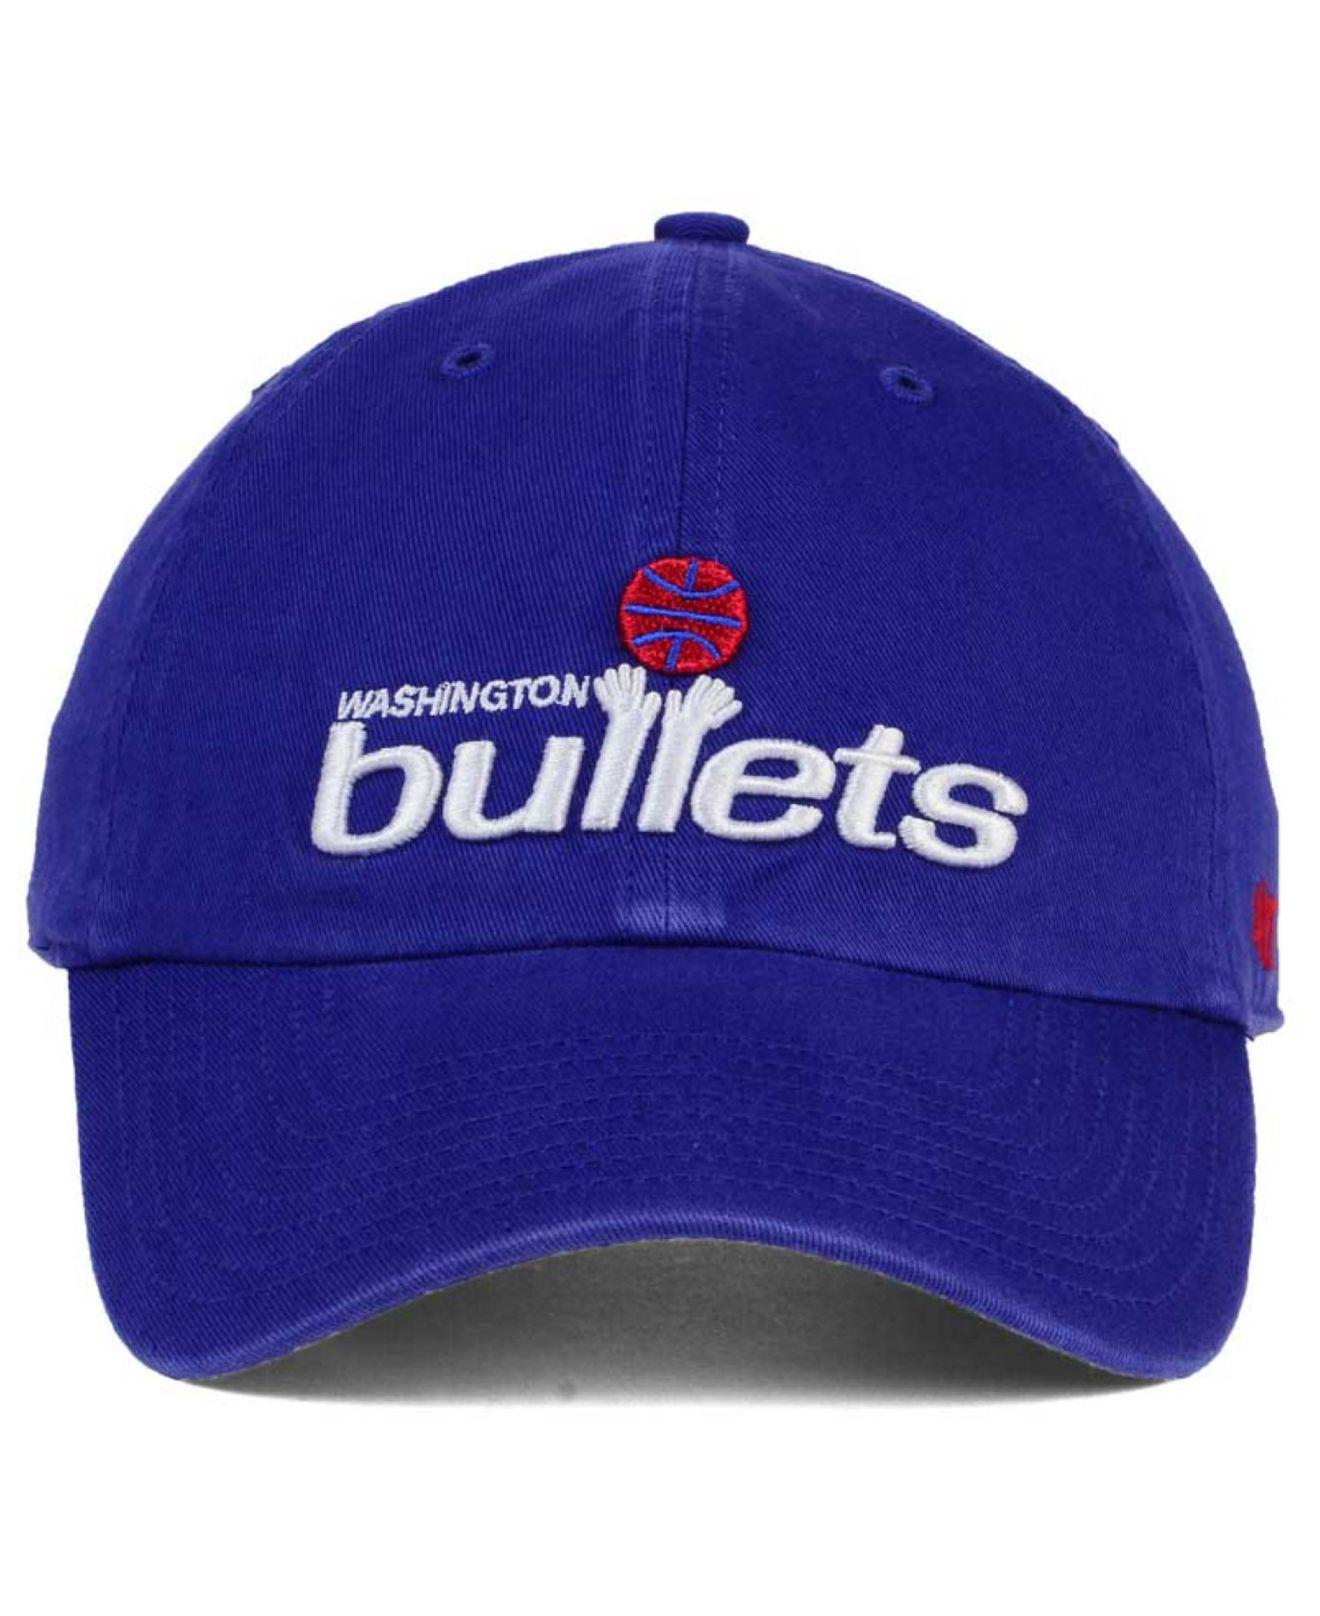 Vintage NBA Washington Bullets Hat